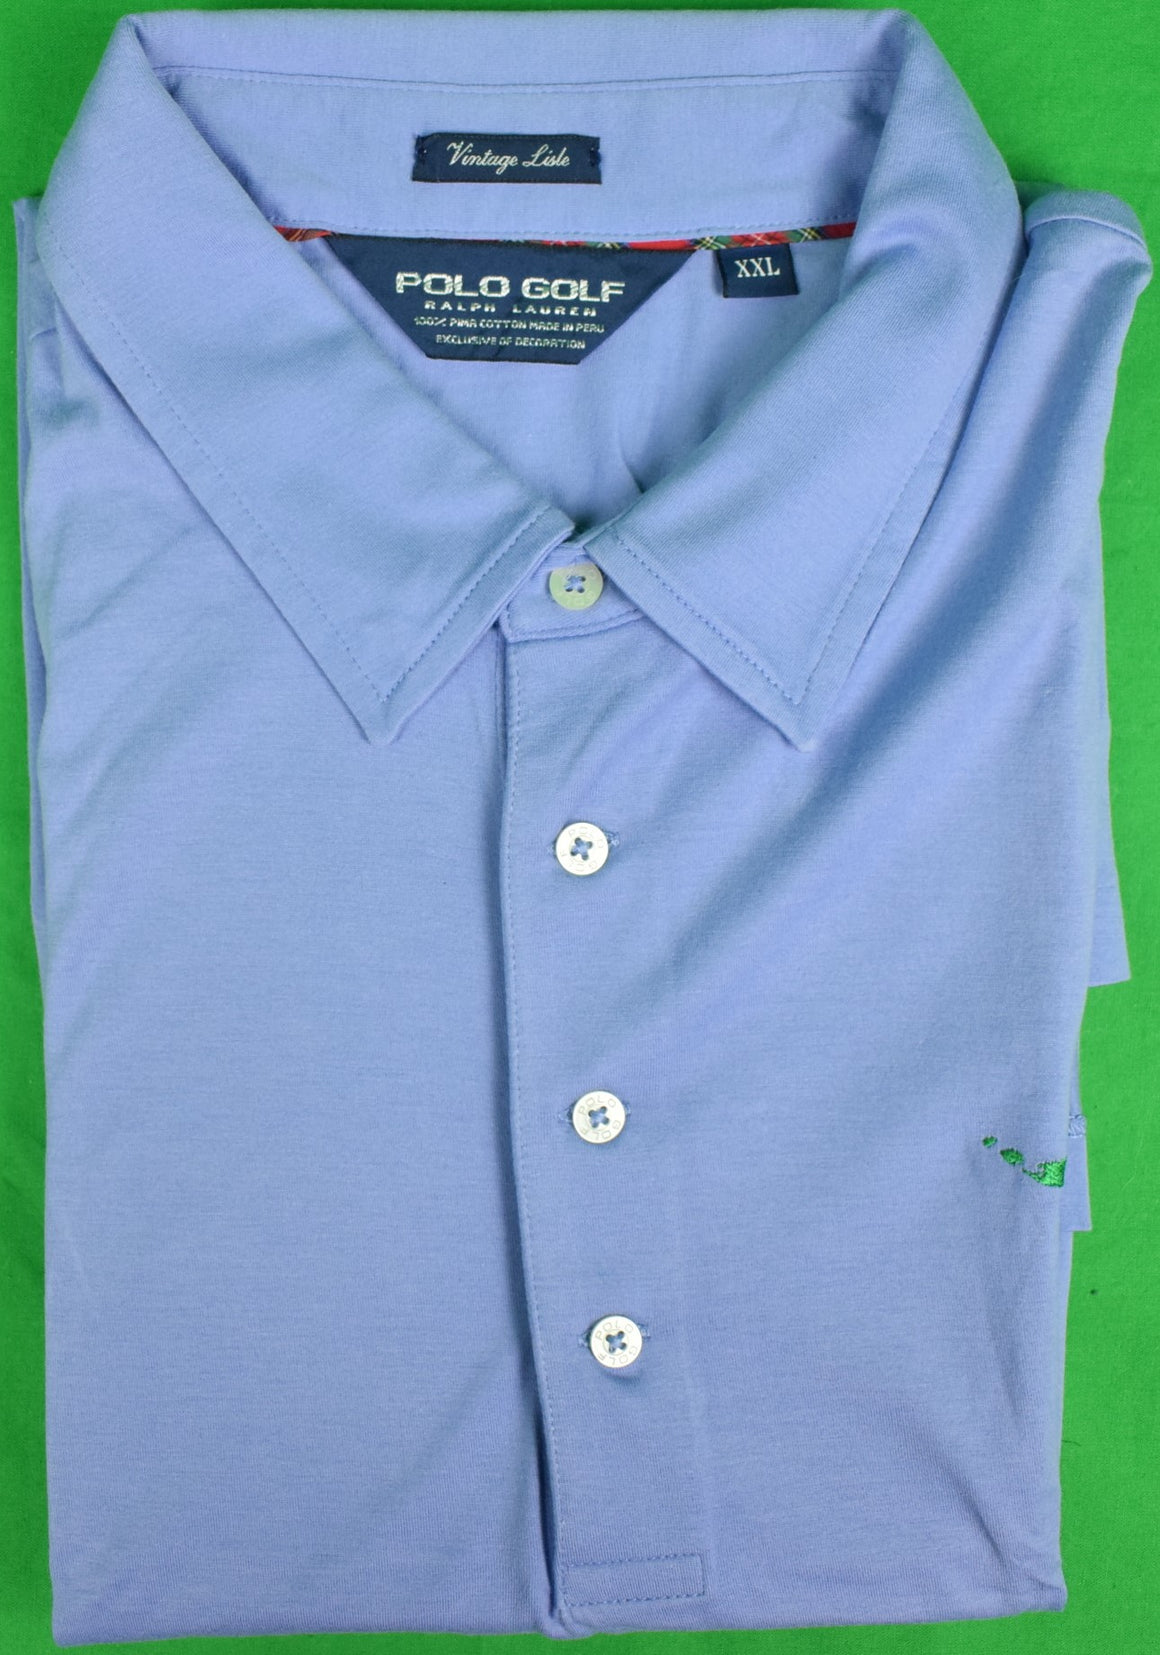 "Ralph Lauren Polo Golf Blue Shirt w/ Miacomet Club Nantucket Logo" Sz: XXL